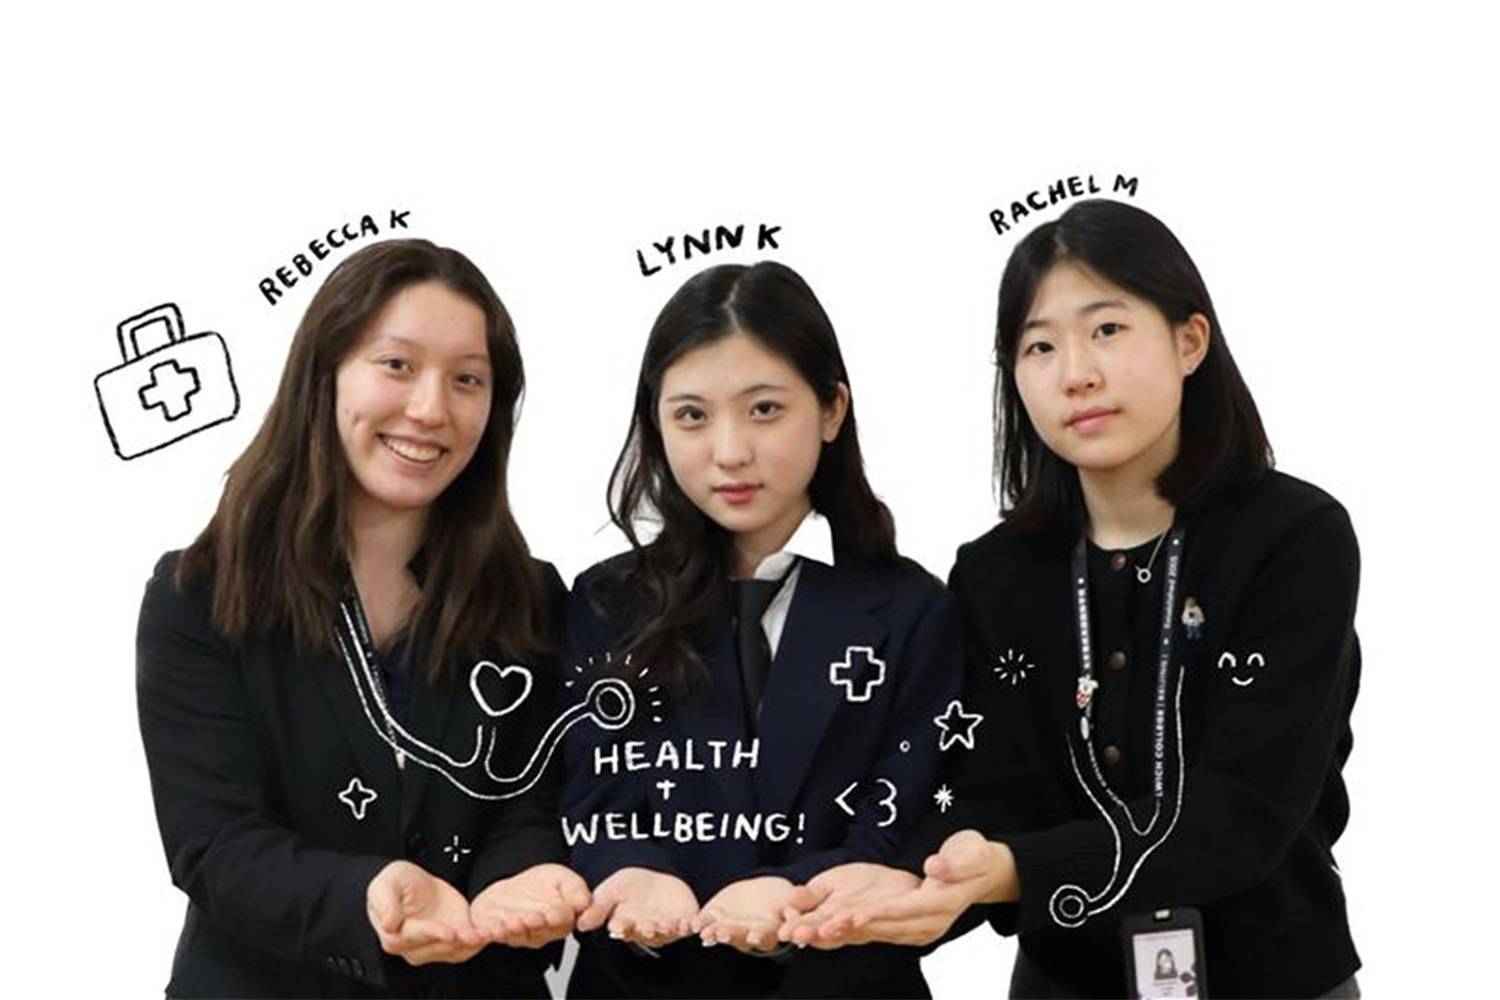 Health and Wellbeing Prefects: Rebecca K, Lynn K, Rachel M